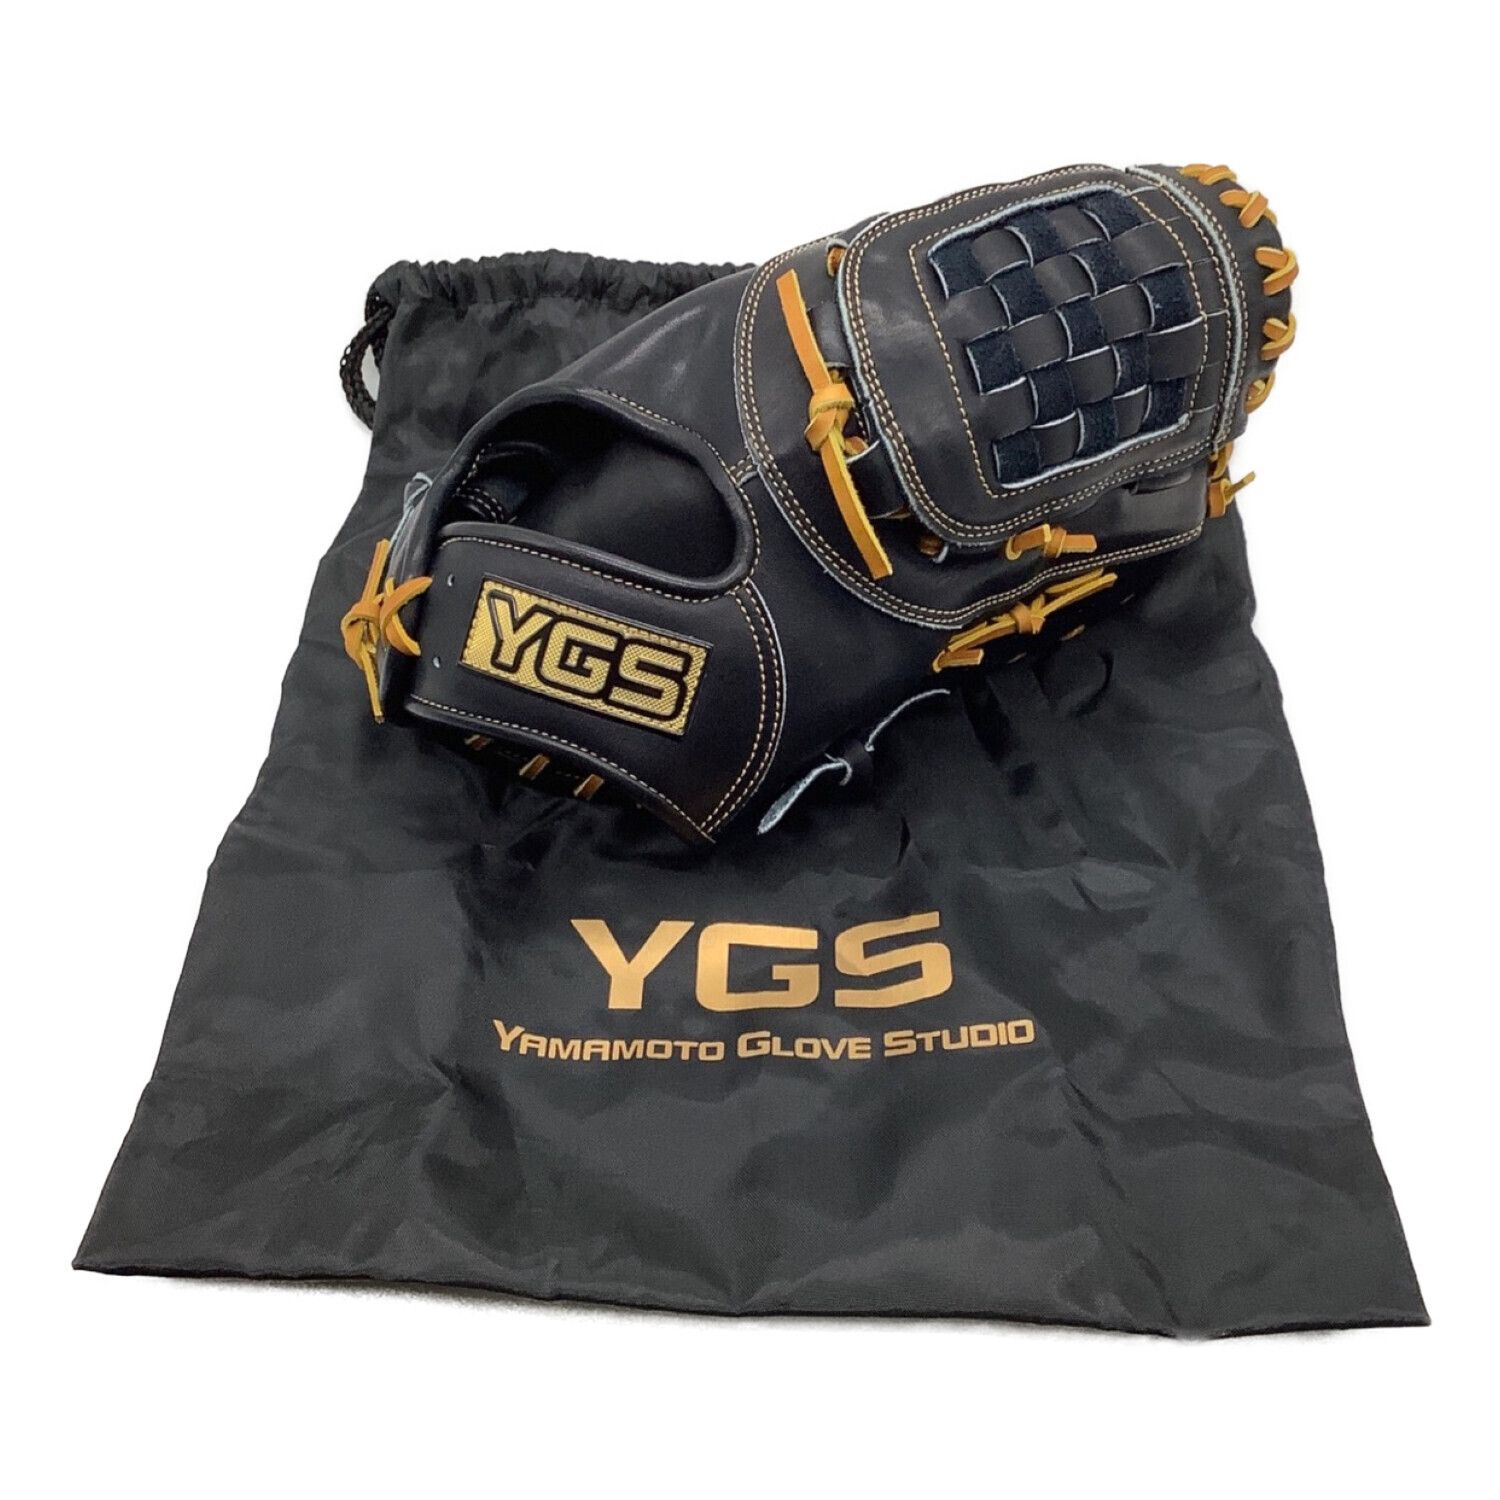 YGS (山本グラブスタジオ) 硬式グローブ SIZE 約31cm ブラック TG 